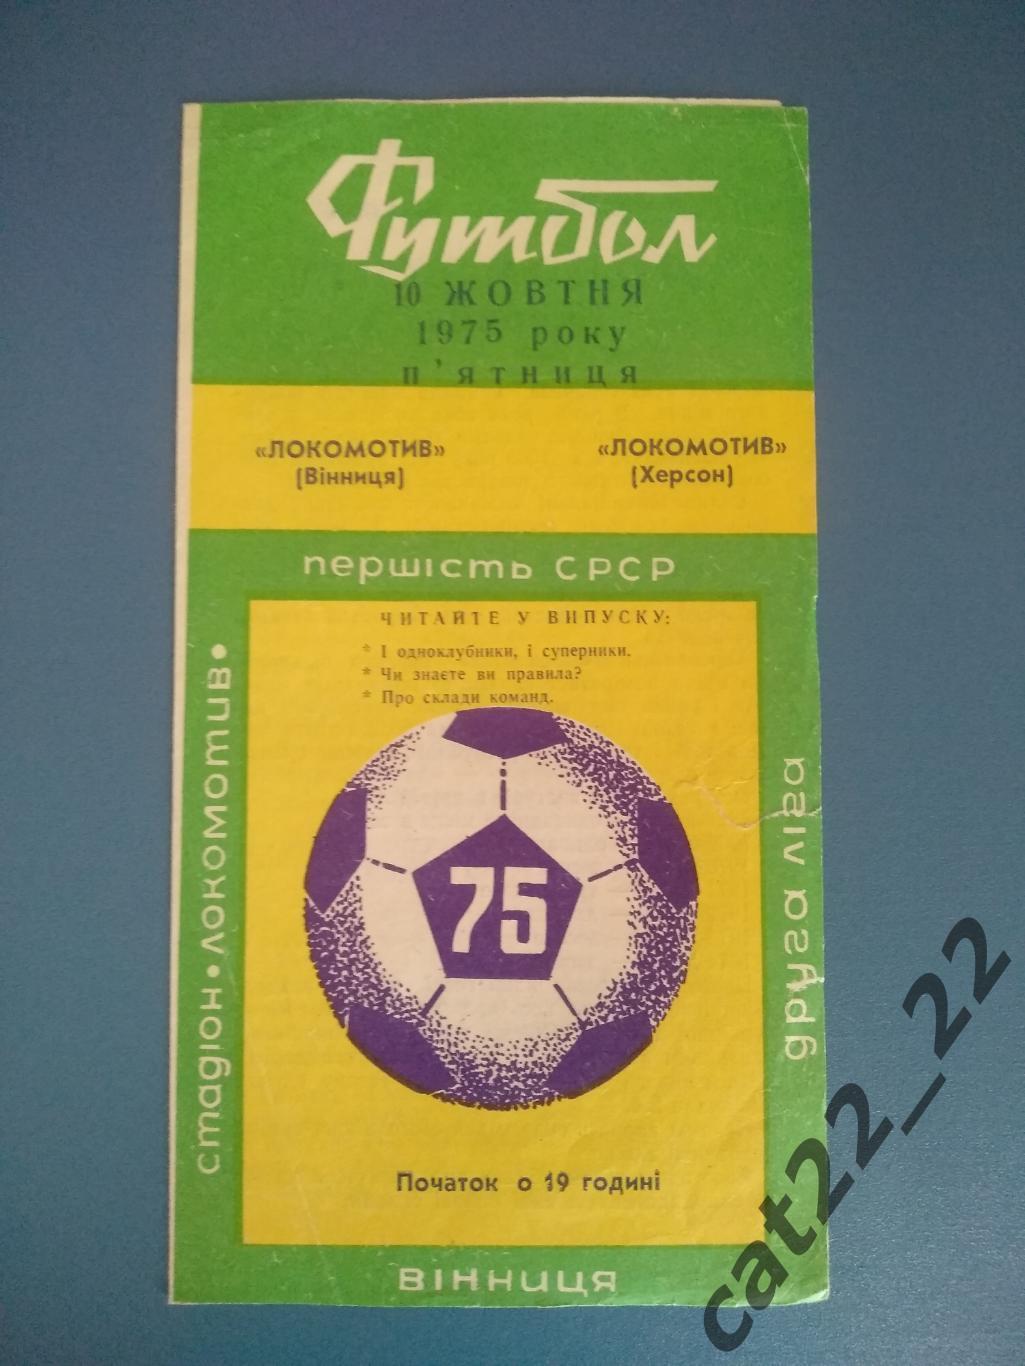 Локомотив Винница - Локомотив Херсон 1975